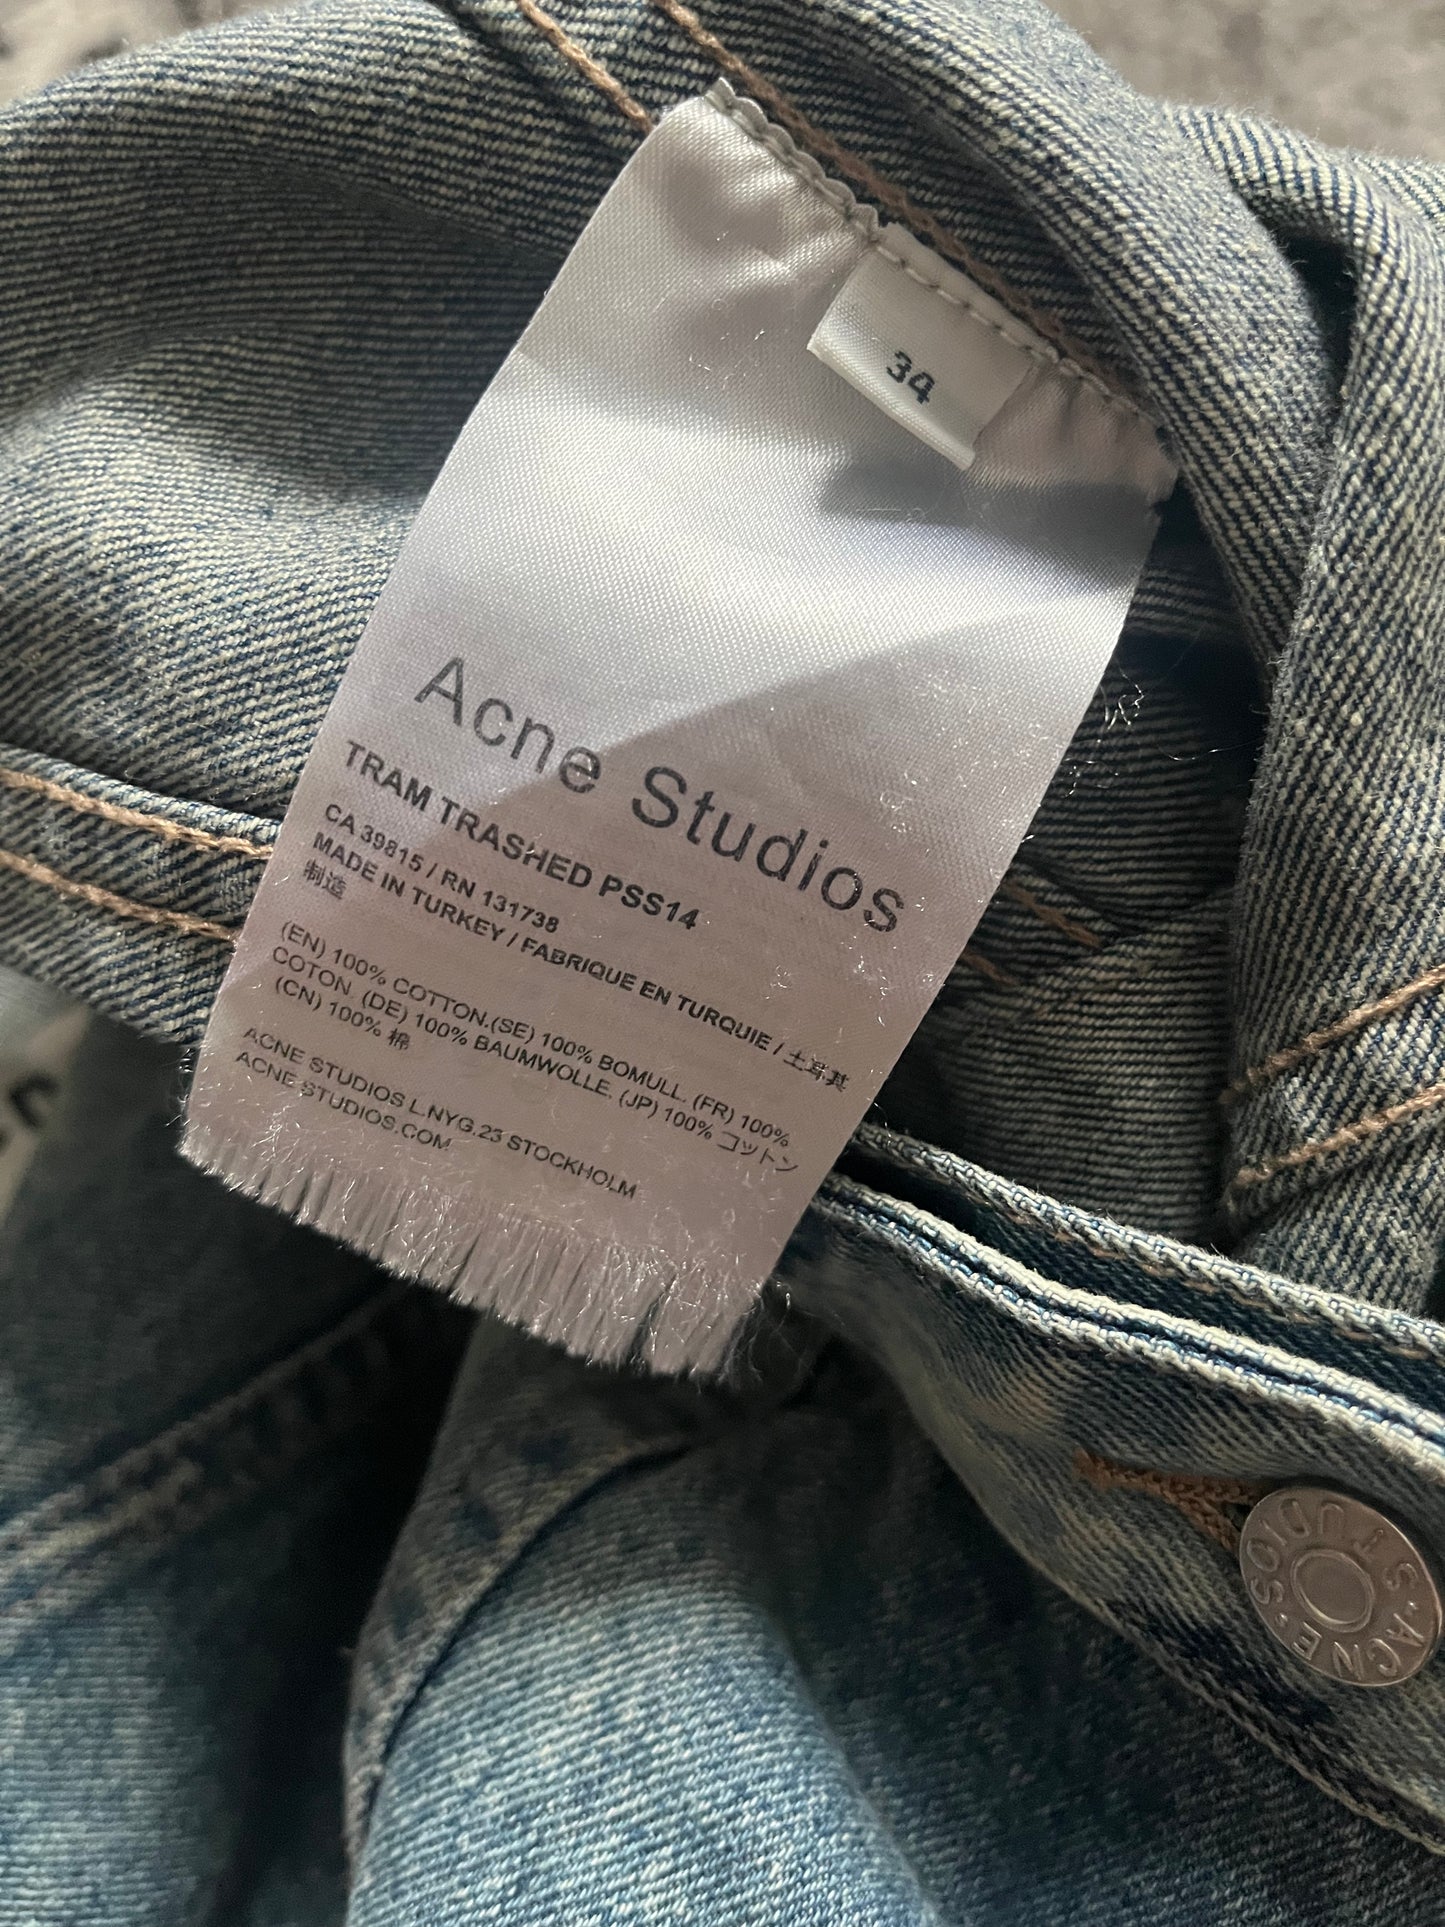 SS2014 Acne Studios Distressed Denim Jacket (XS)